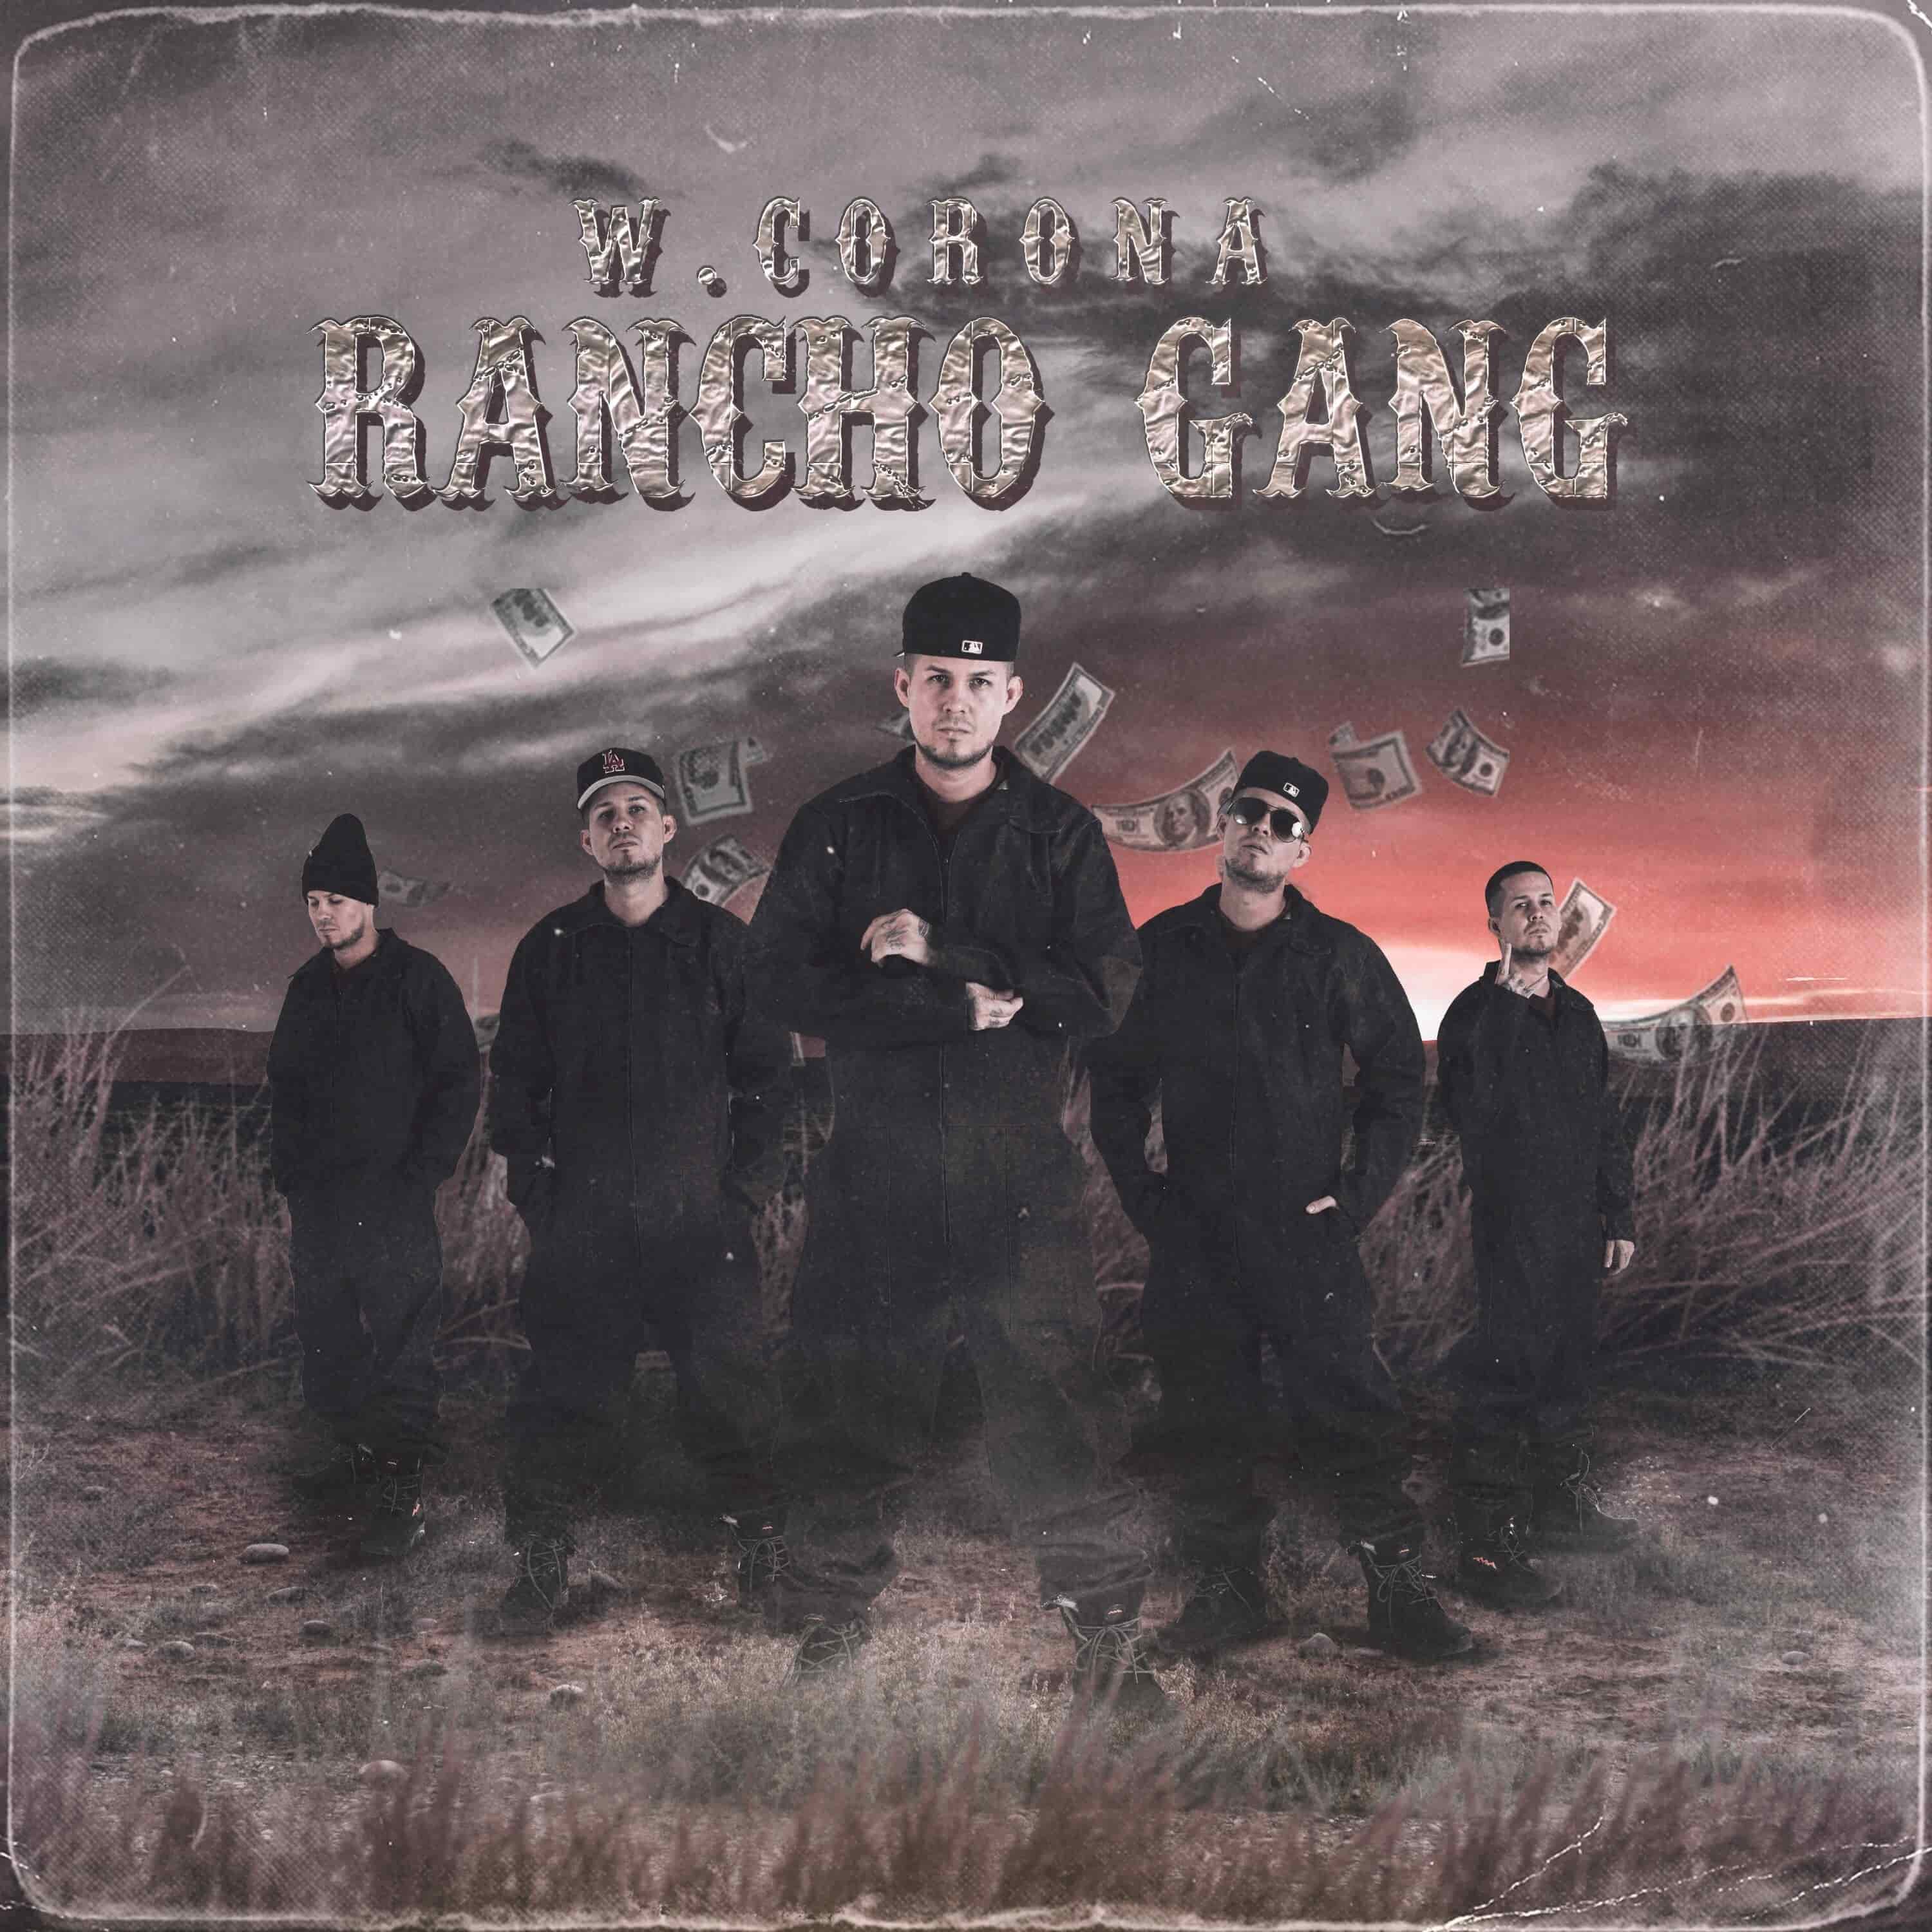 W. Corona  estrena álbum ‘rancho gang’ una ruta completa del urbano al regional mexicano.